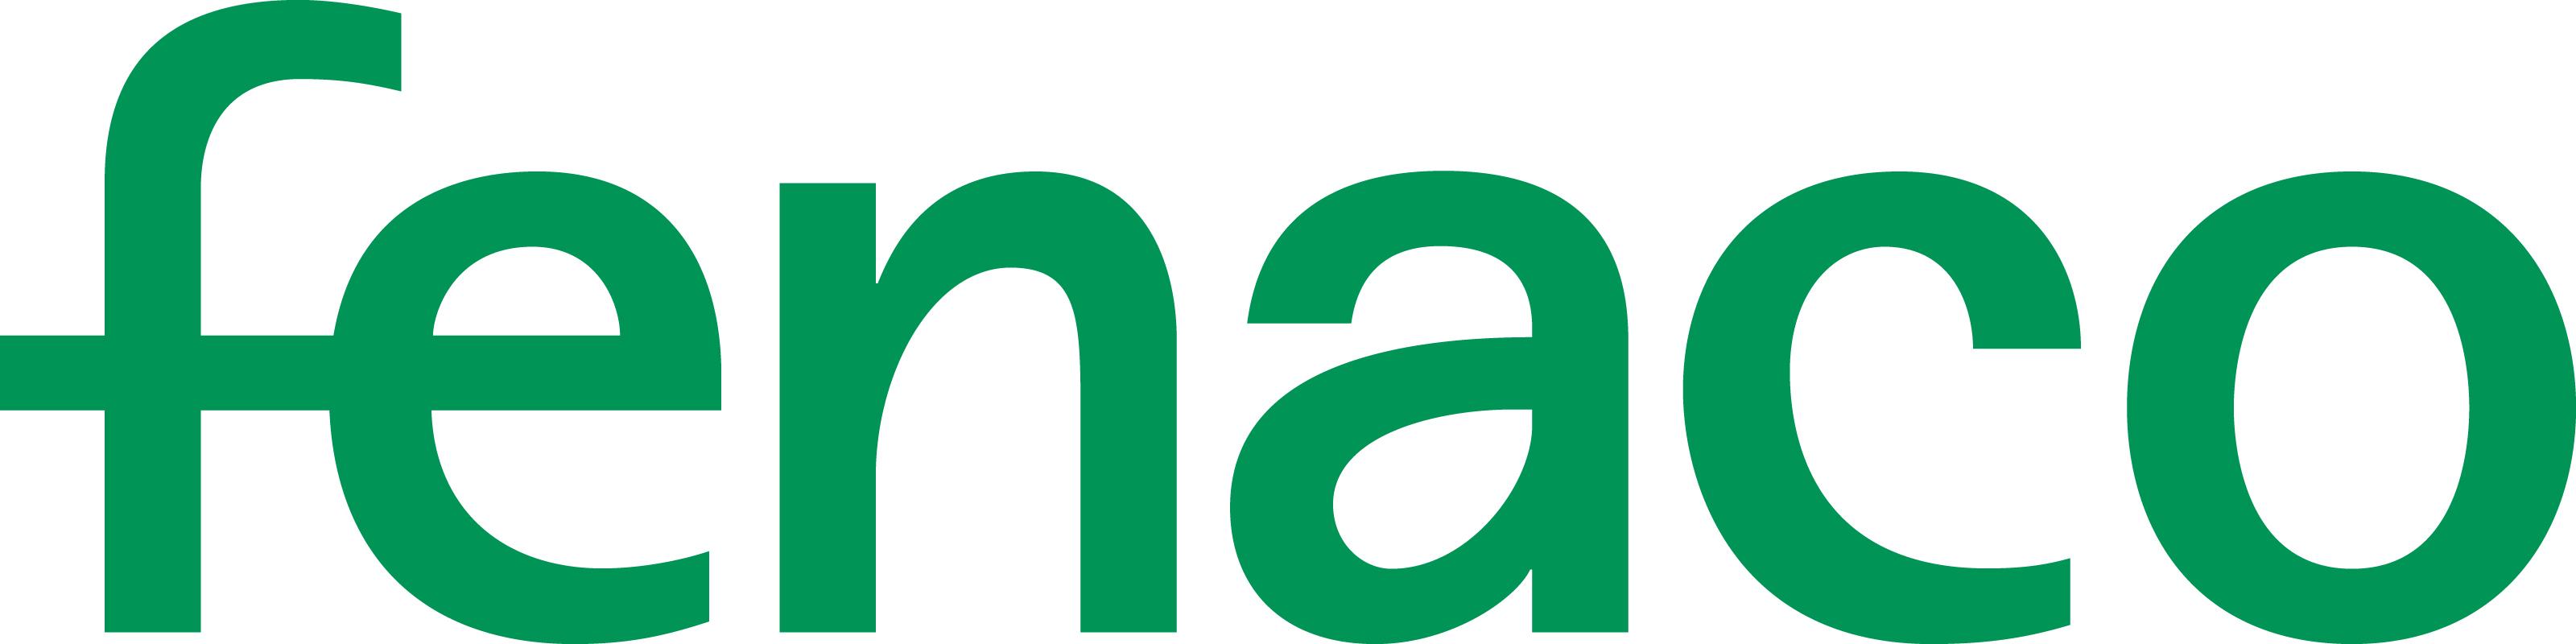 fenaco Logo Green RGB 1